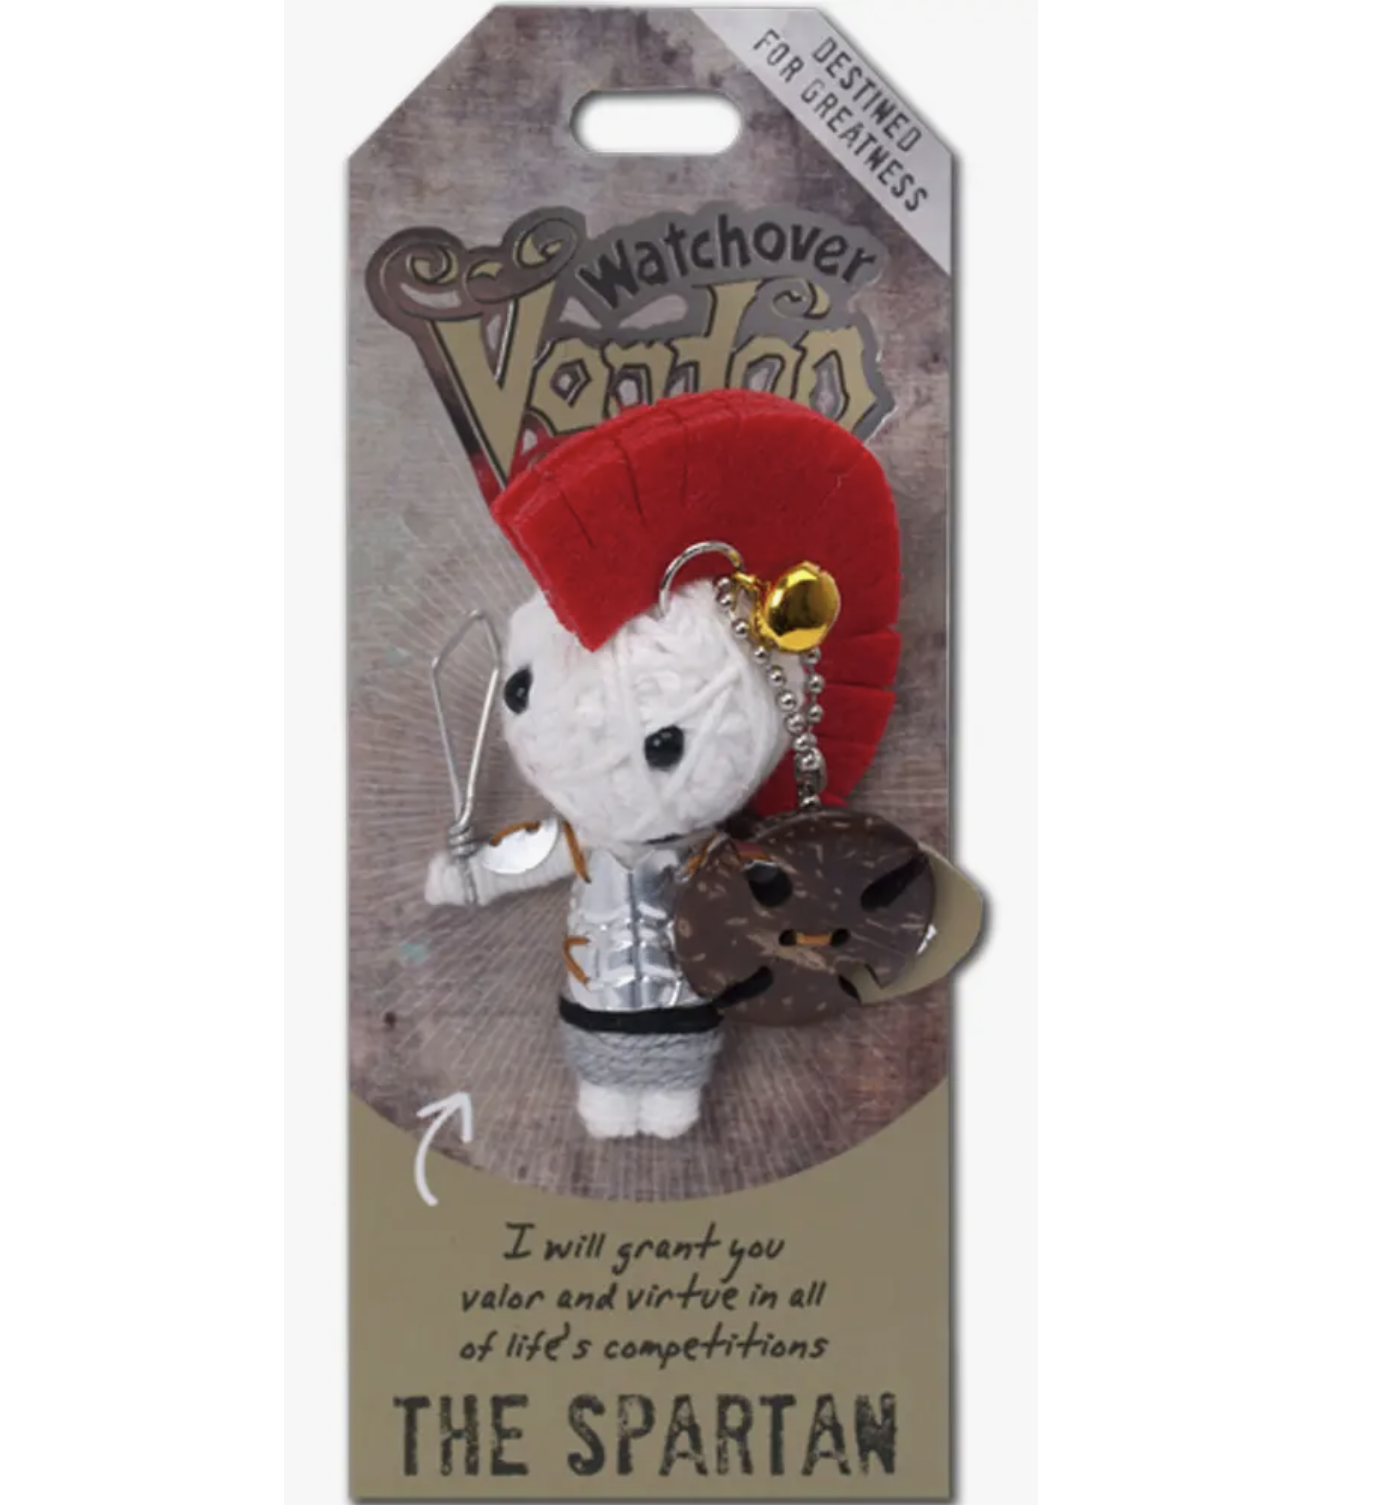 The Spartan Voodoo Doll